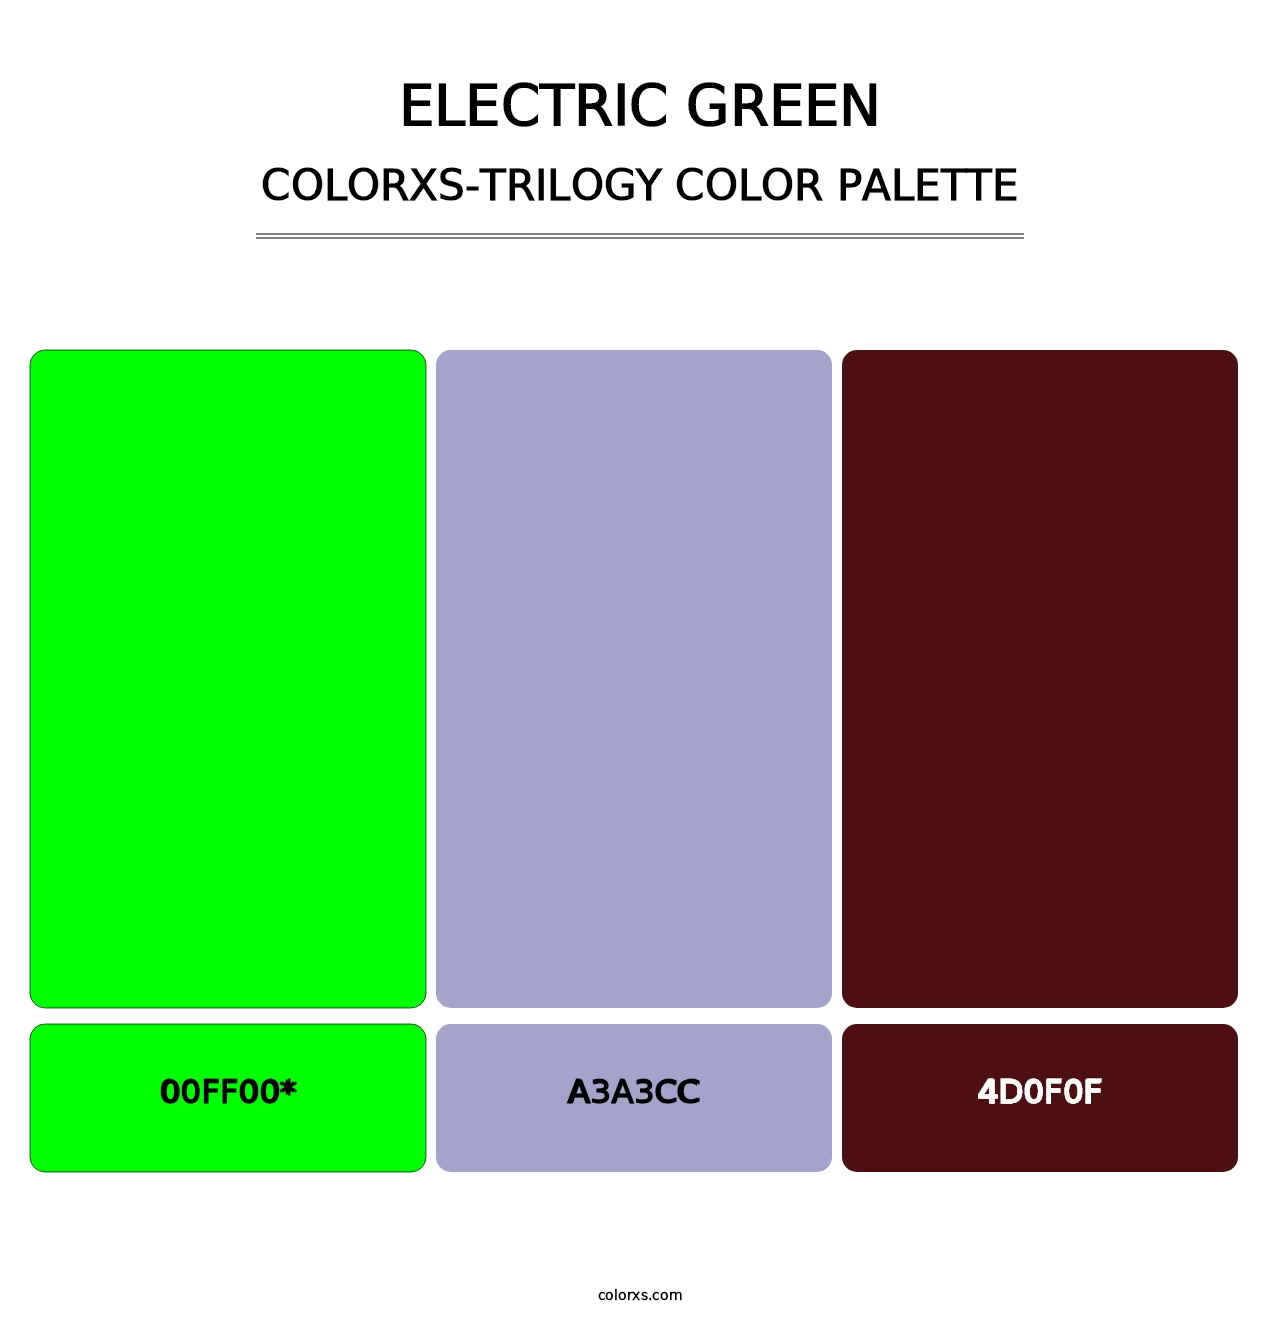 Electric Green - Colorxs Trilogy Palette